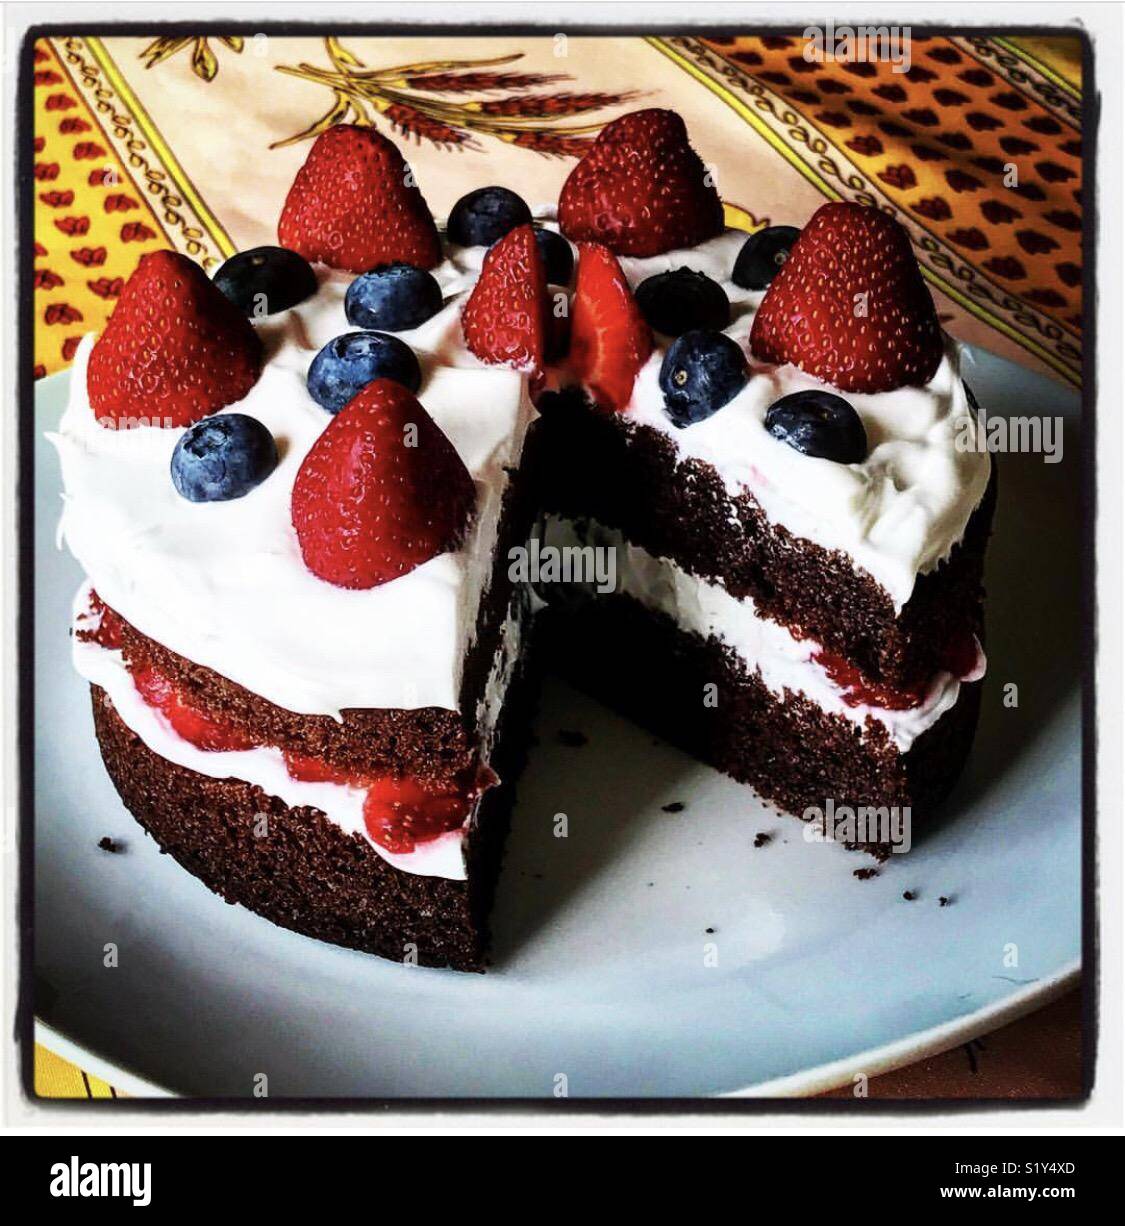 Chocolate strawberry and blueberry shortcake Stock Photo